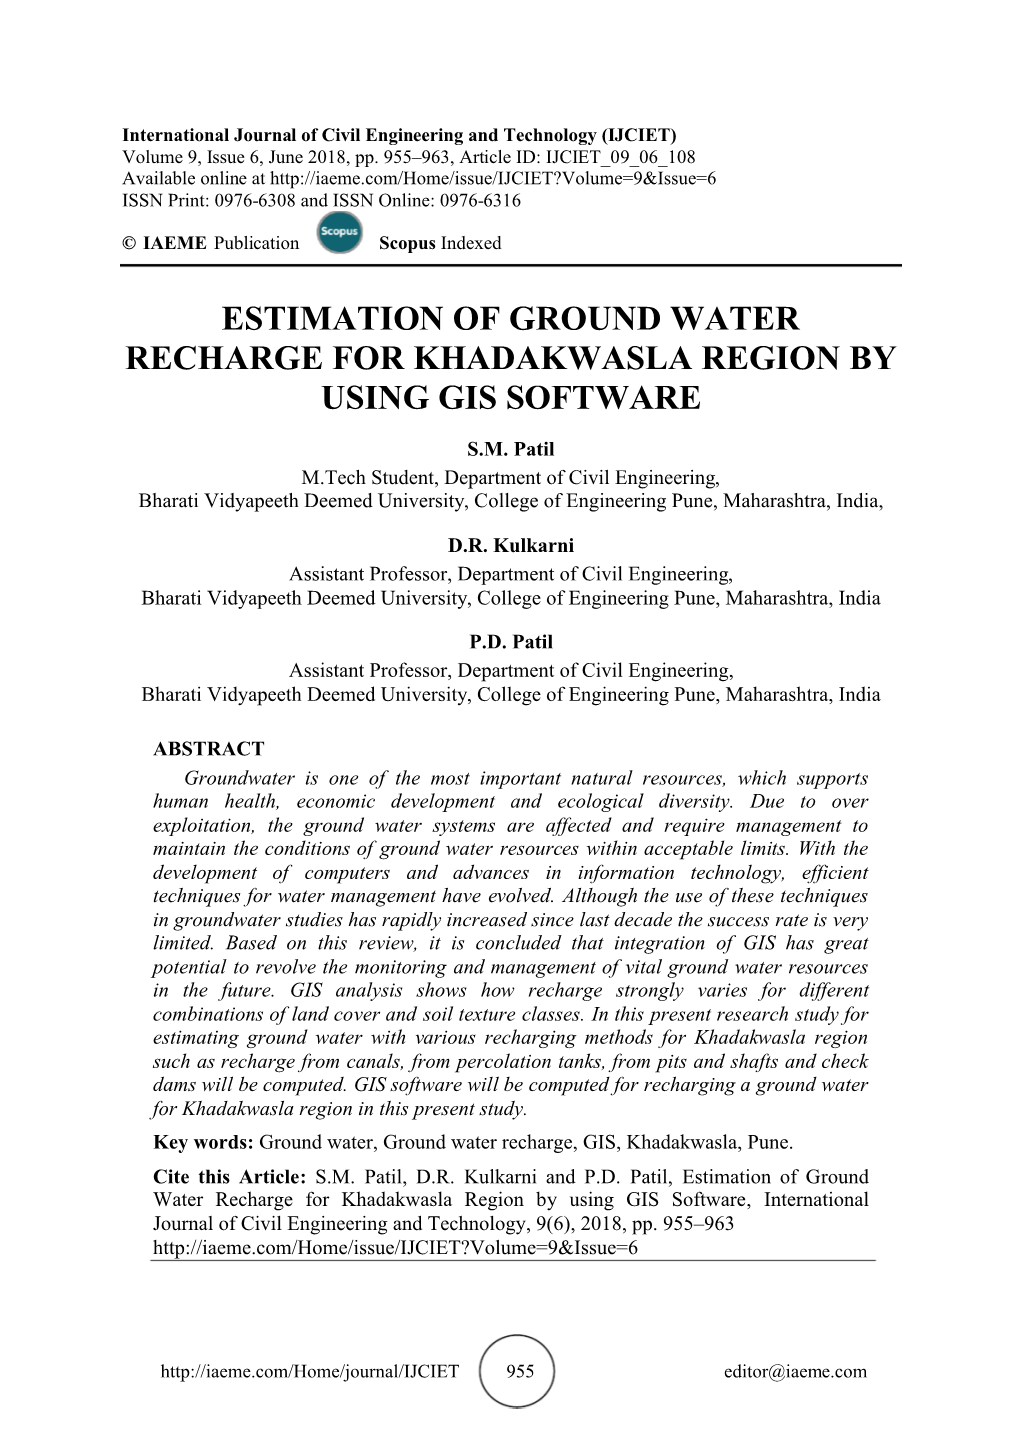 Estimation of Ground Water Recharge for Khadakw La